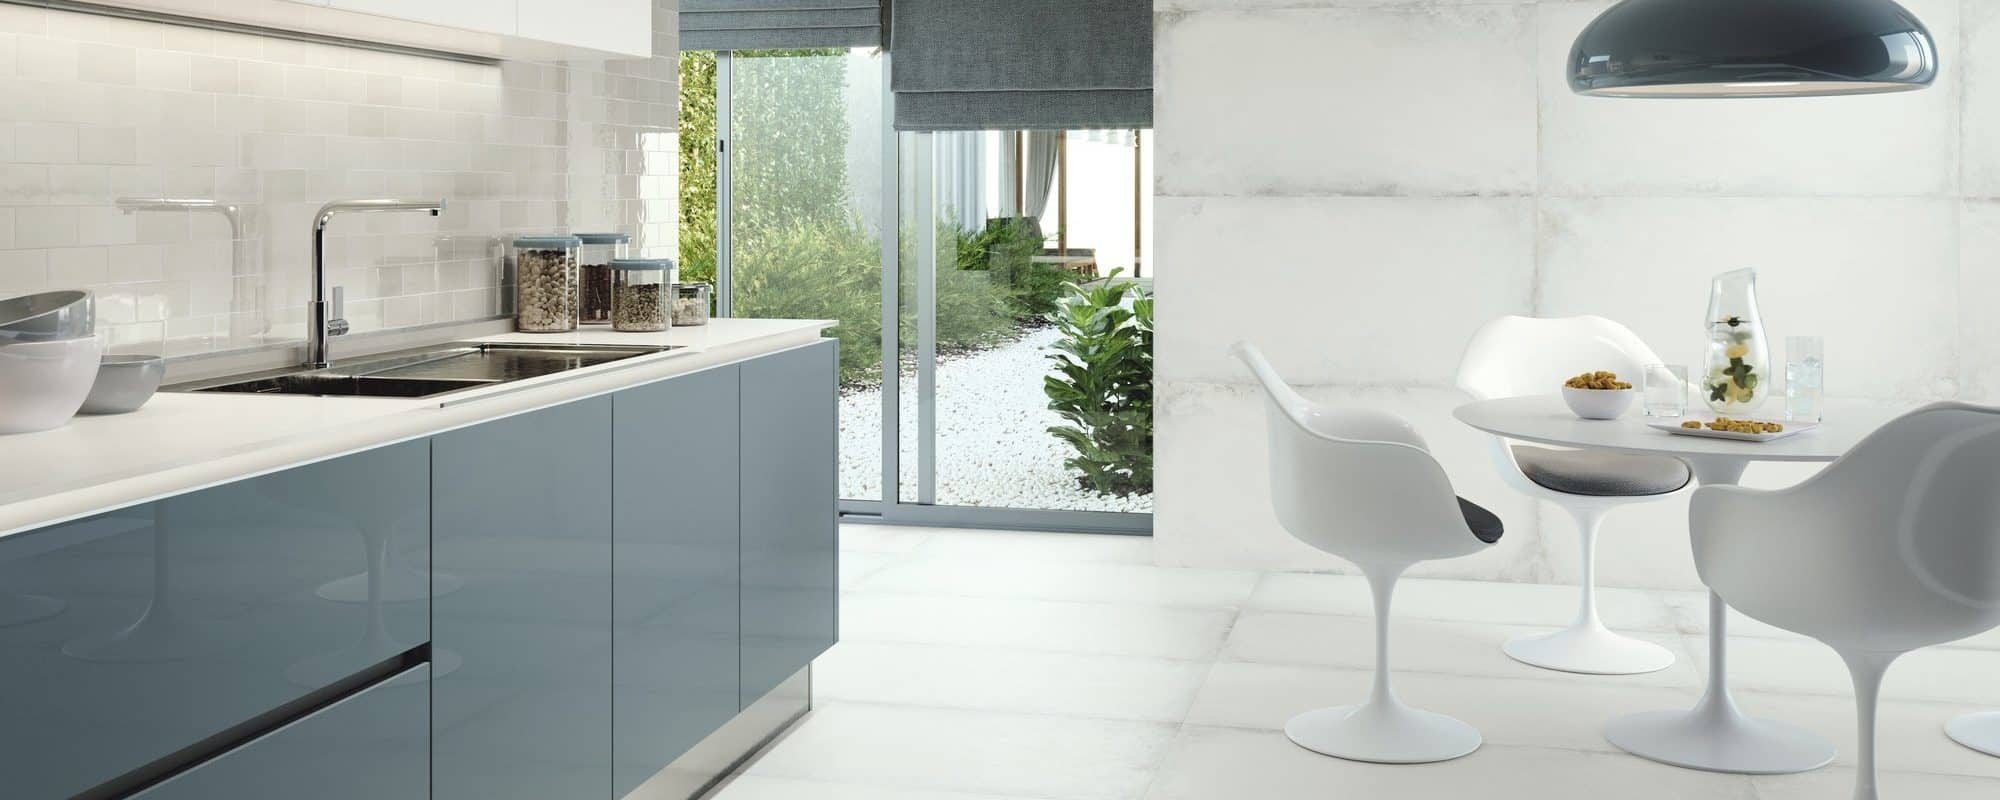 NAXOS cement effect porcelain bathroom tiles uk slider 3